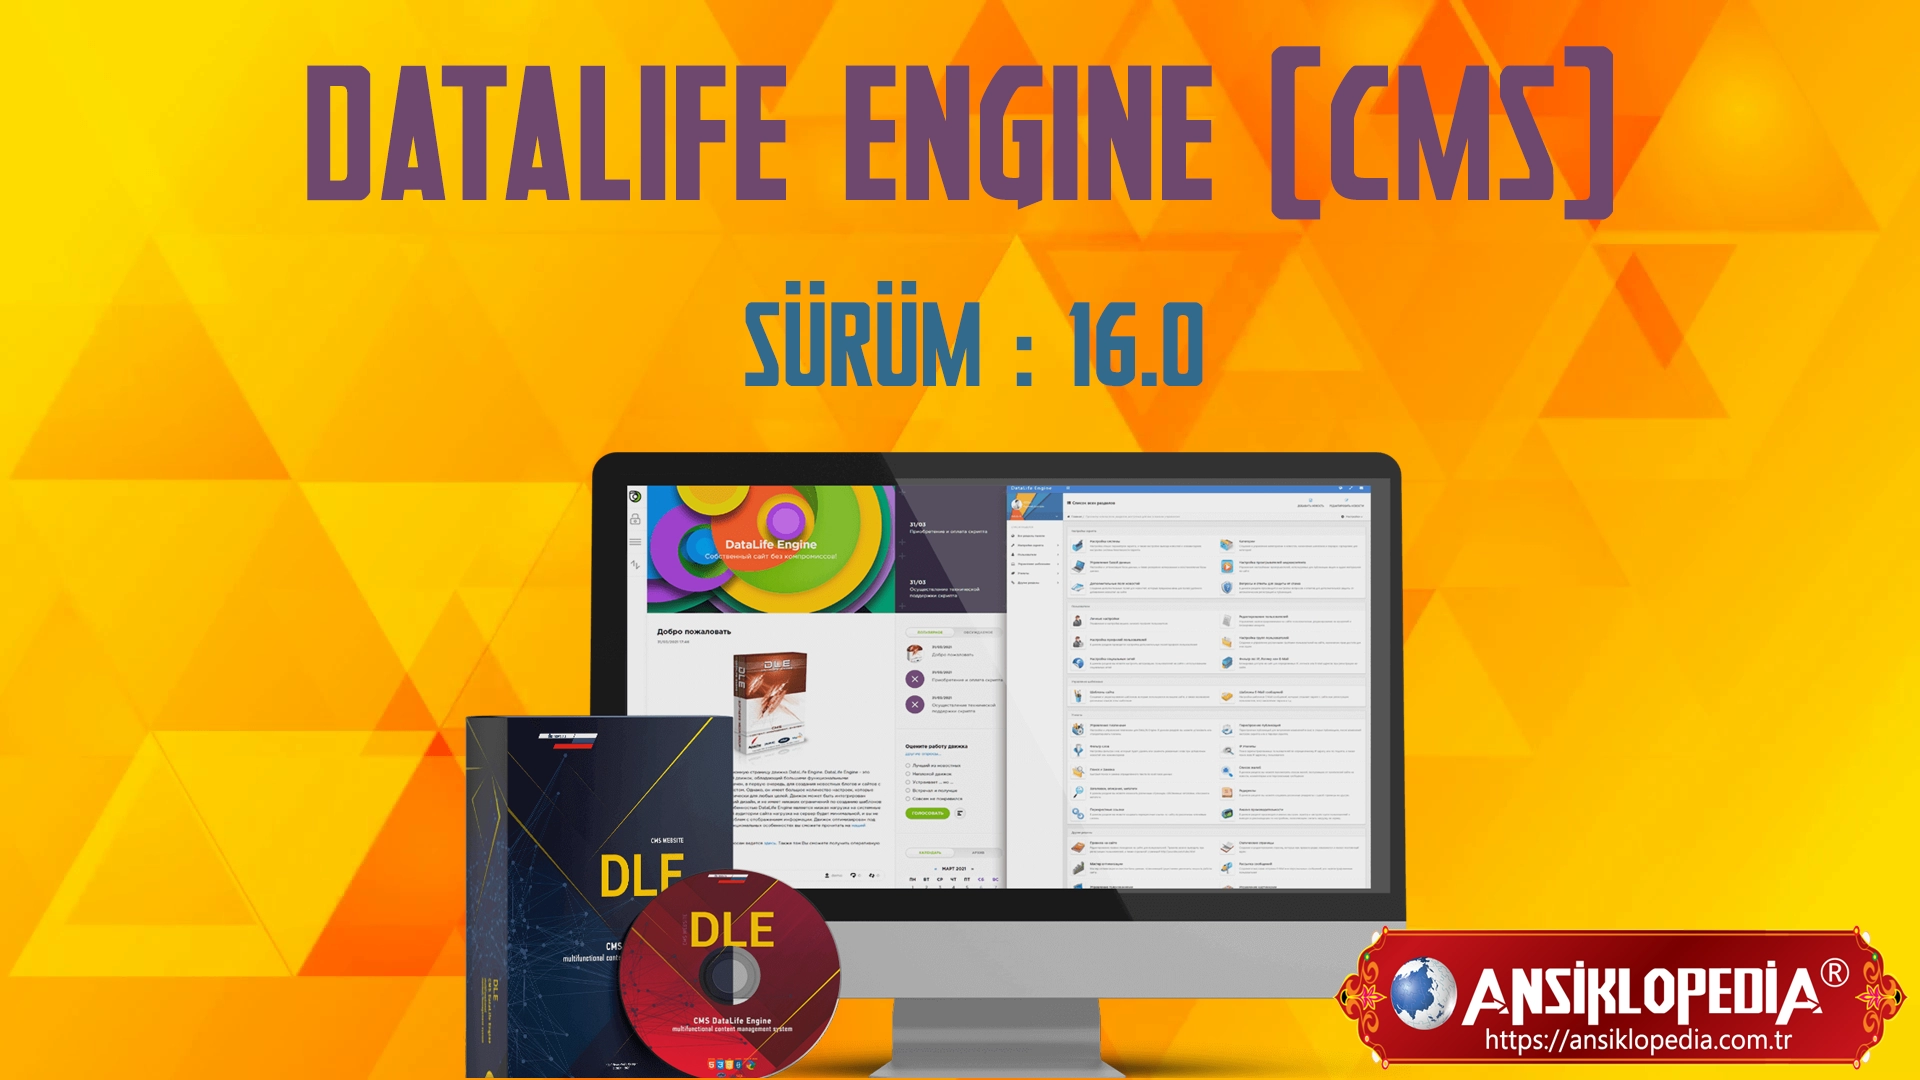 Datalife Engine CMS V.16.0 Sürümü